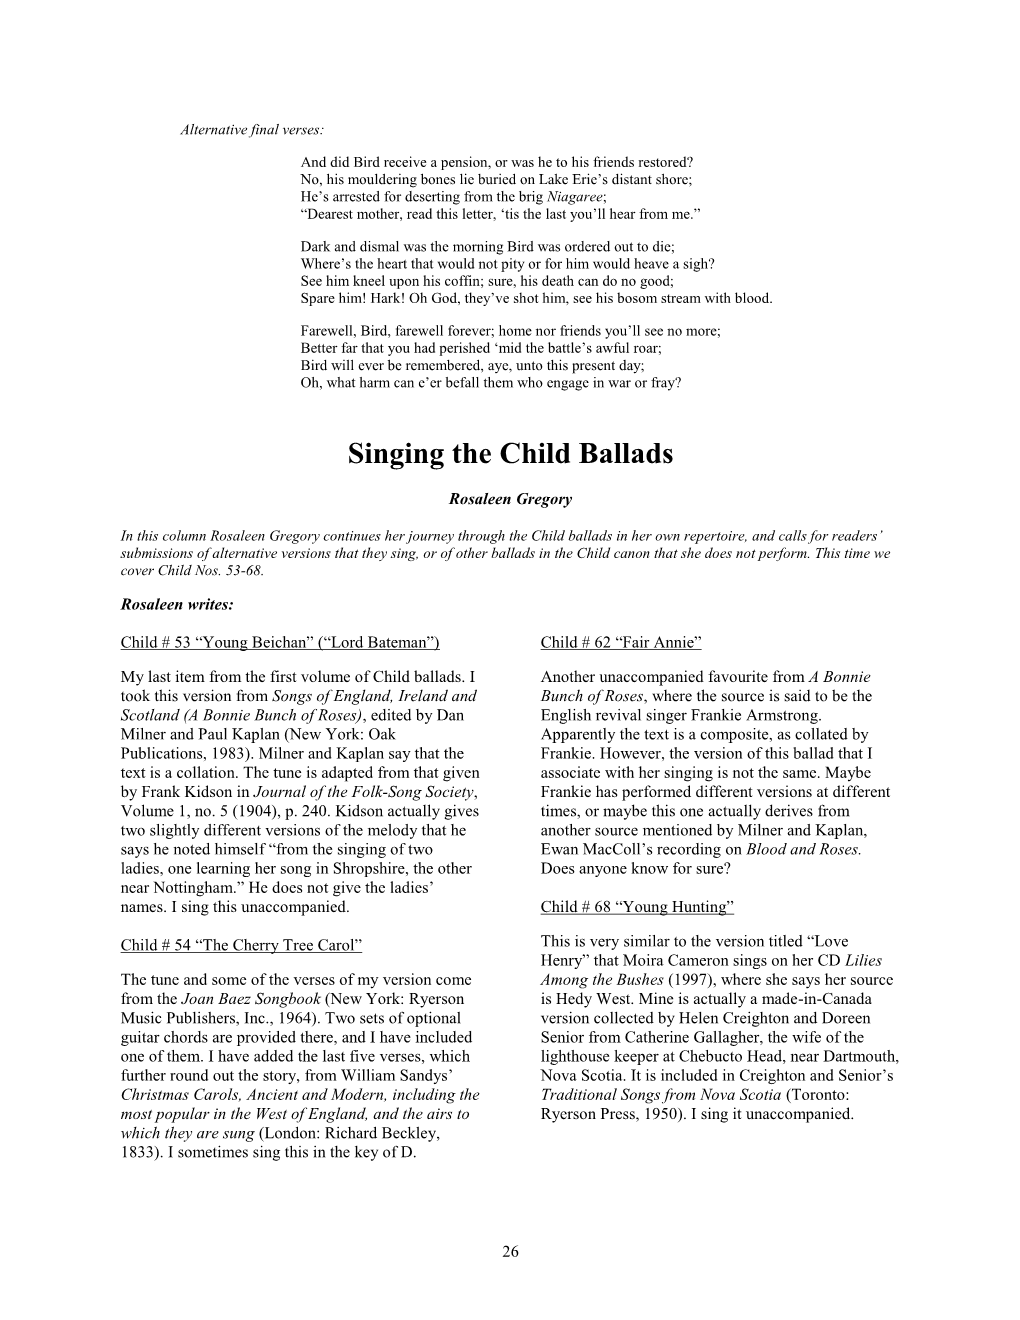 Singing the Child Ballads